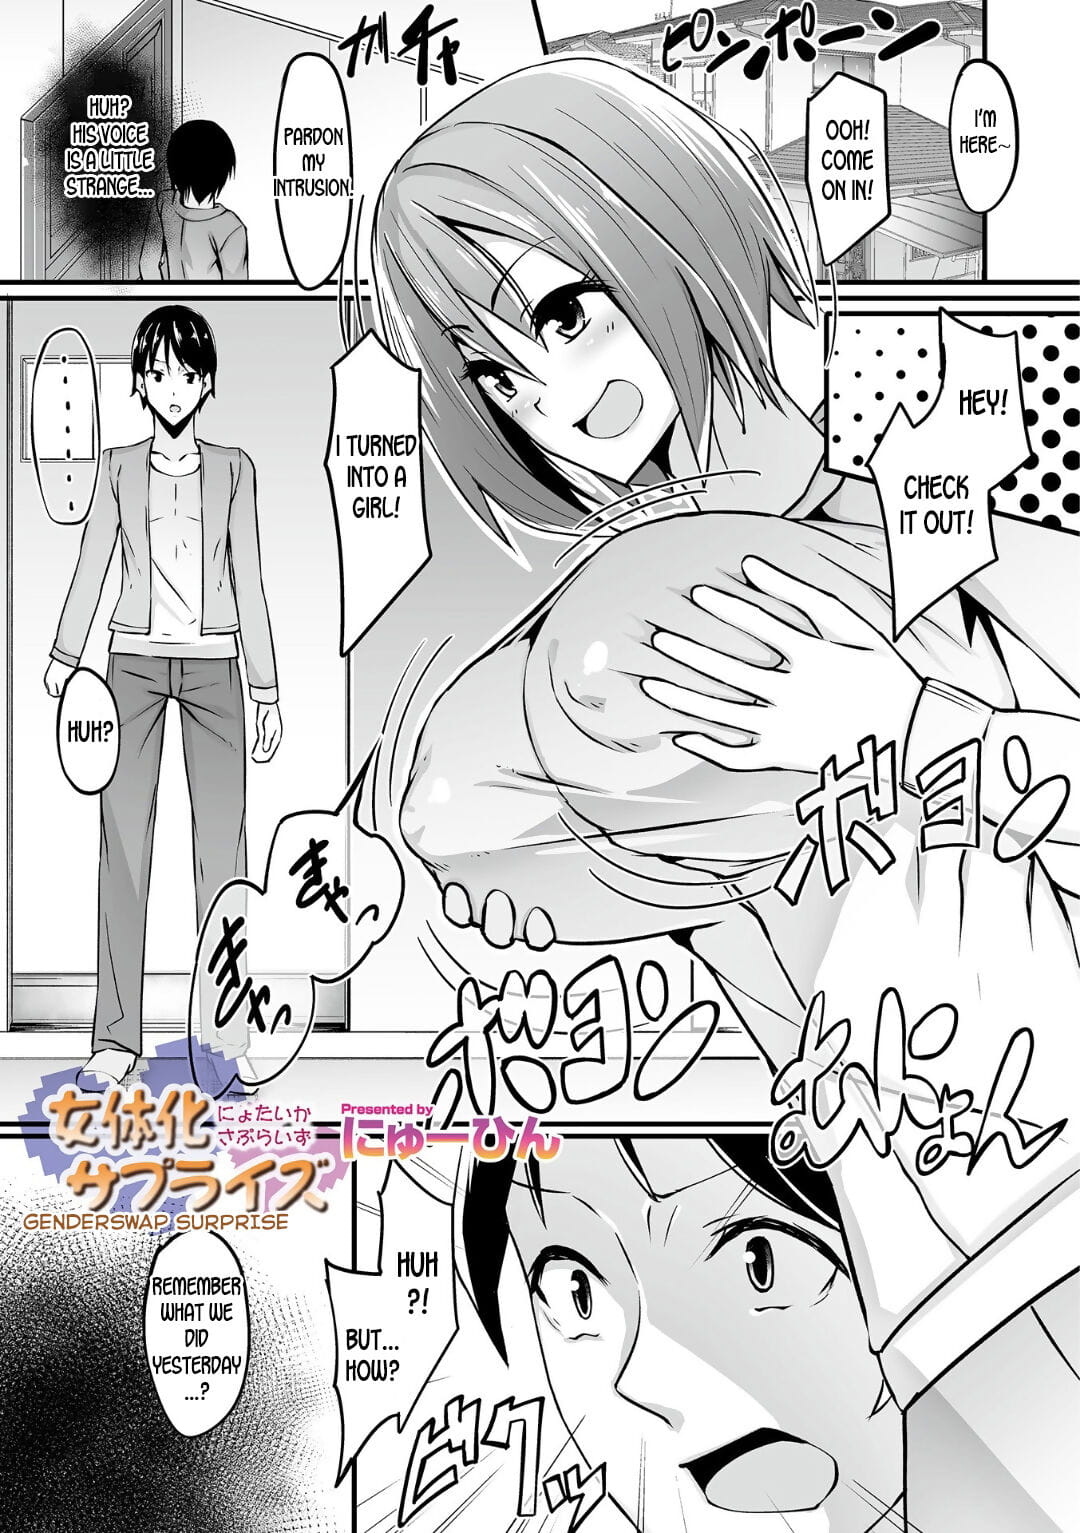 Nyotaika Surprise - Genderswap Surprise page 1